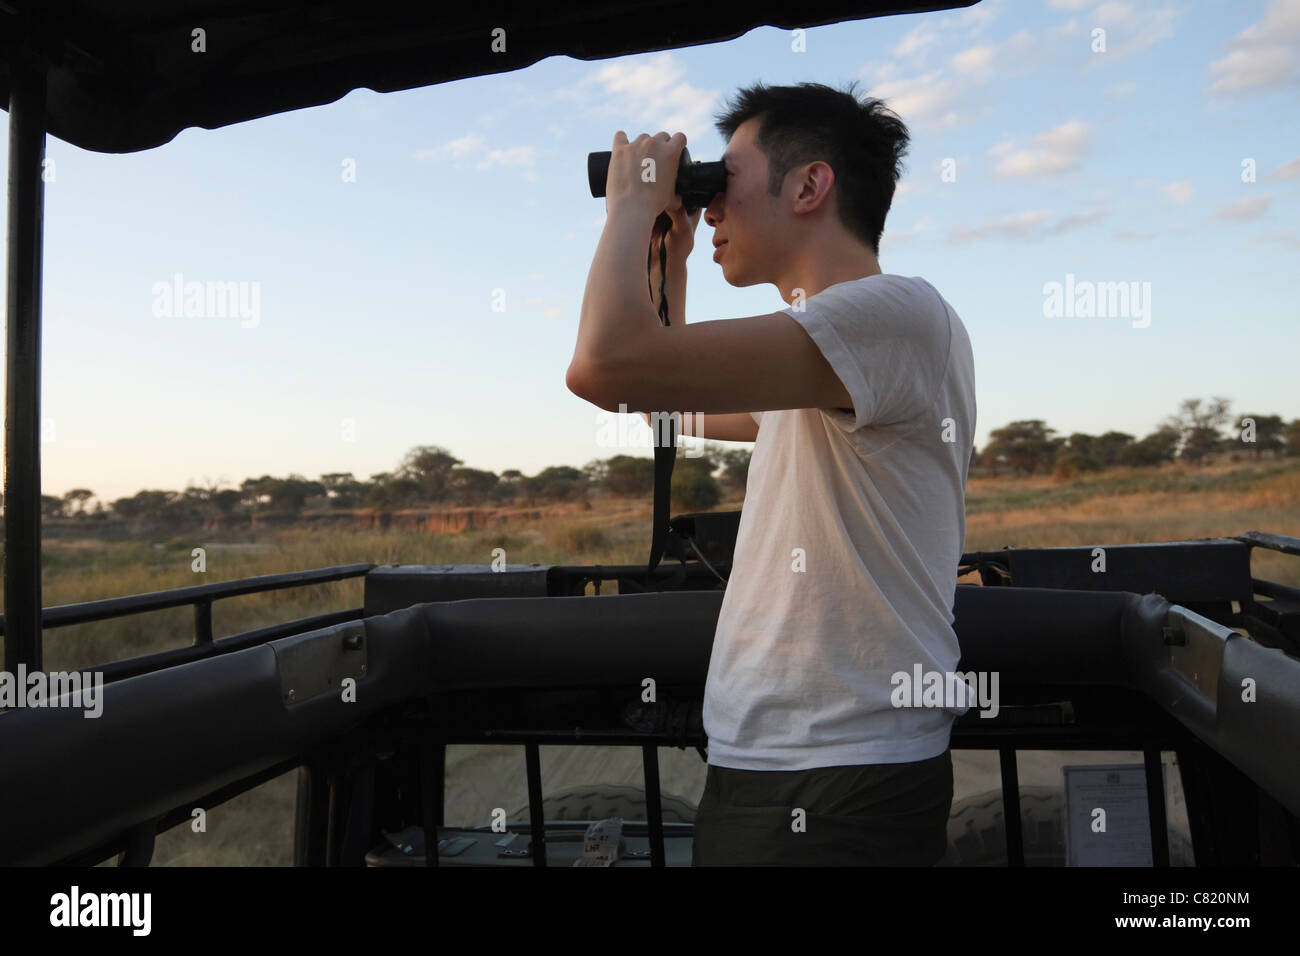 Chinese man riding in truck on safari using binoculars Stock Photo